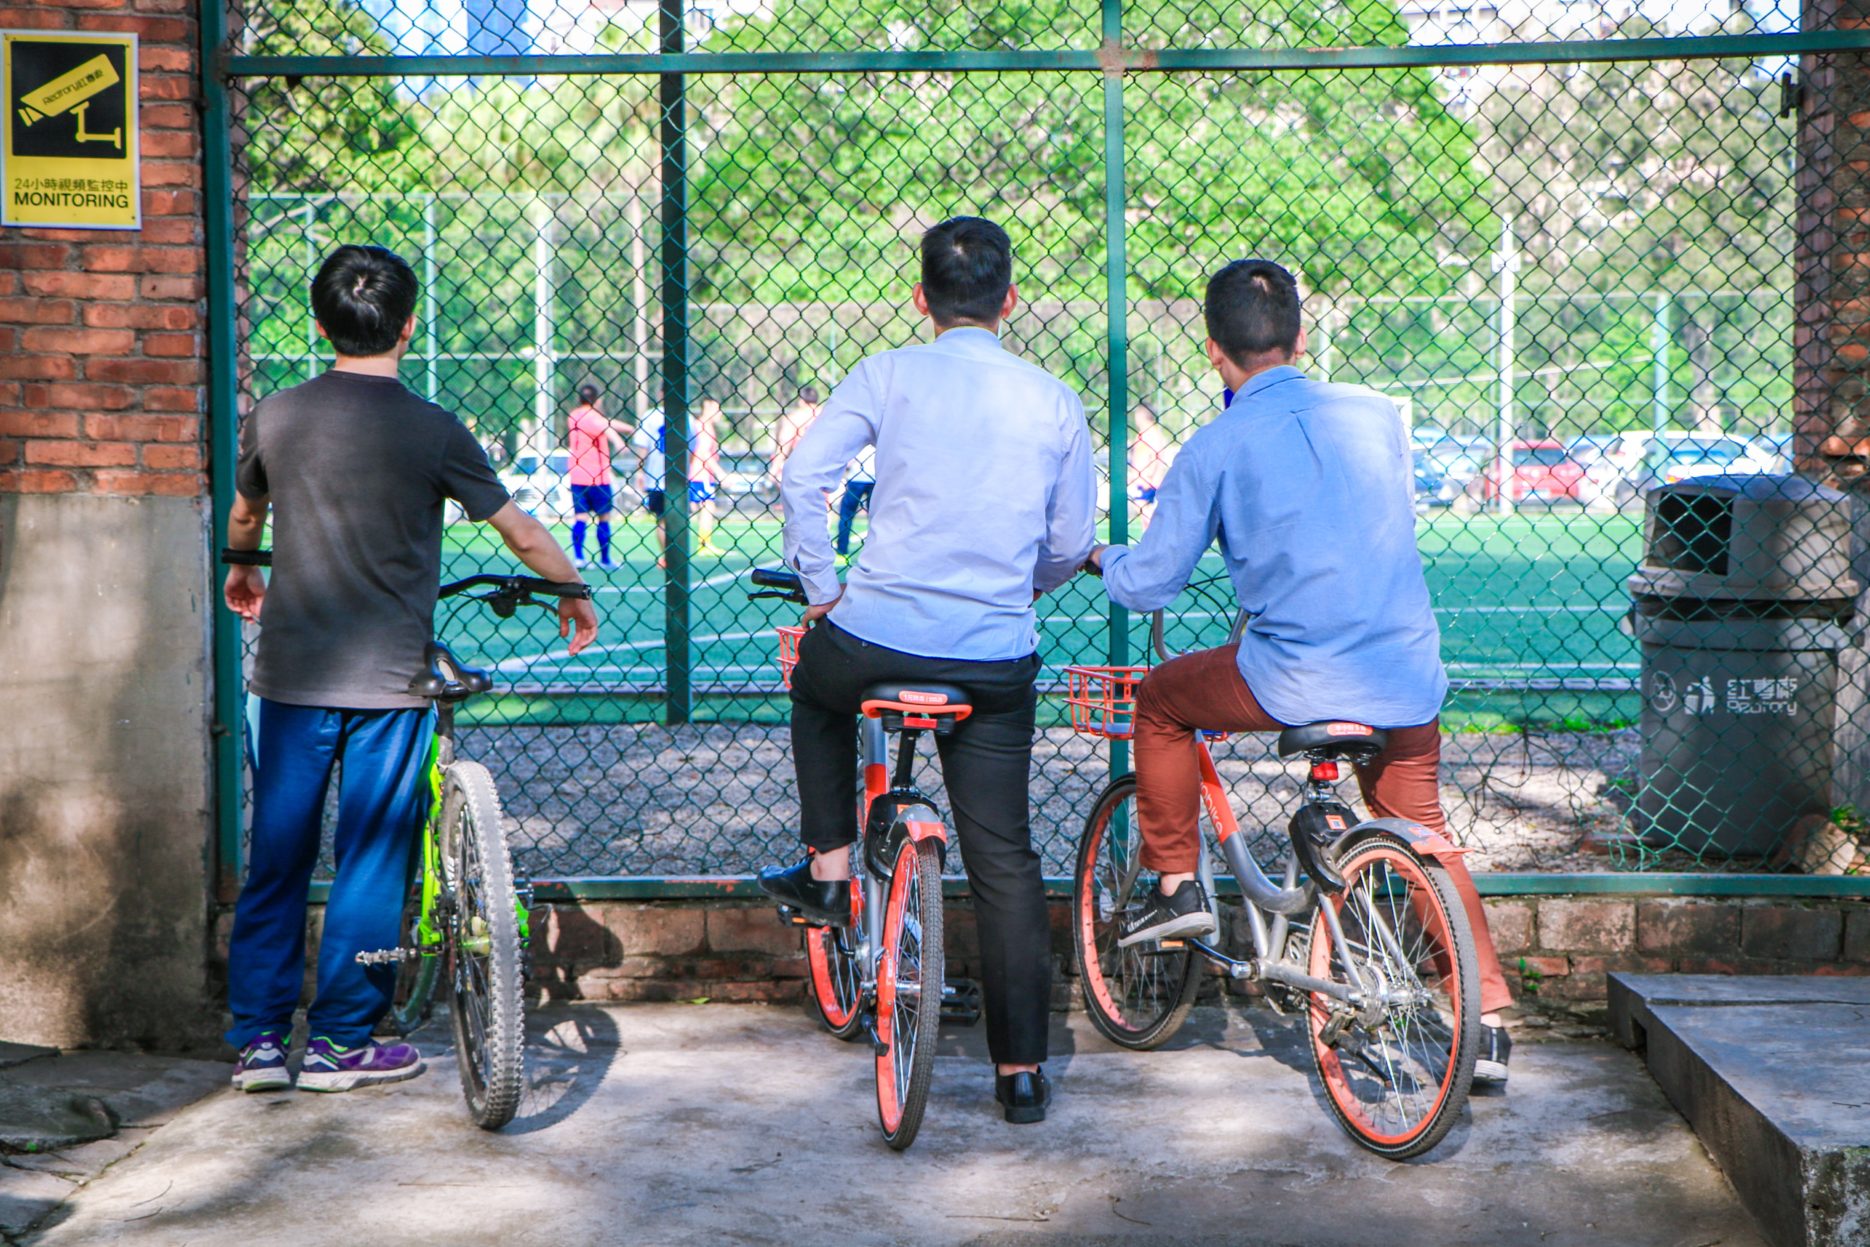 Cyclists watch football in China. Credit: Unsplash